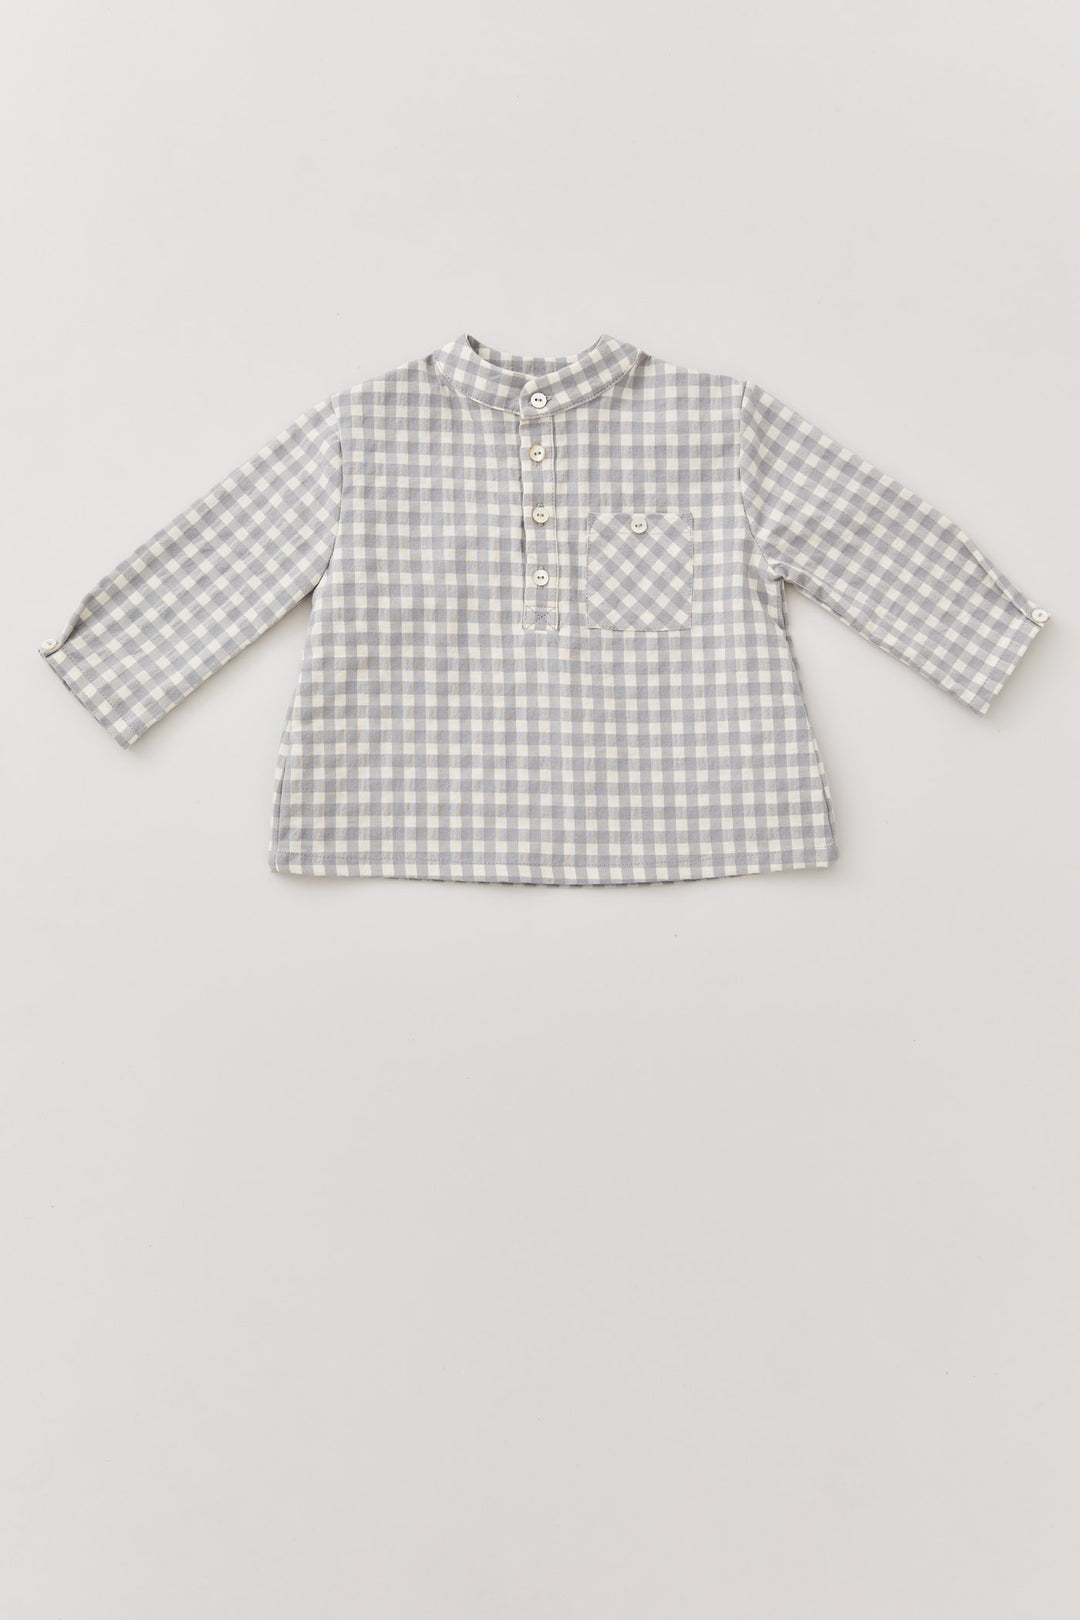 Baby Apple Shirt in Cream Grey Check - Designed by Ingrid Lewis - Strawberries & Cream